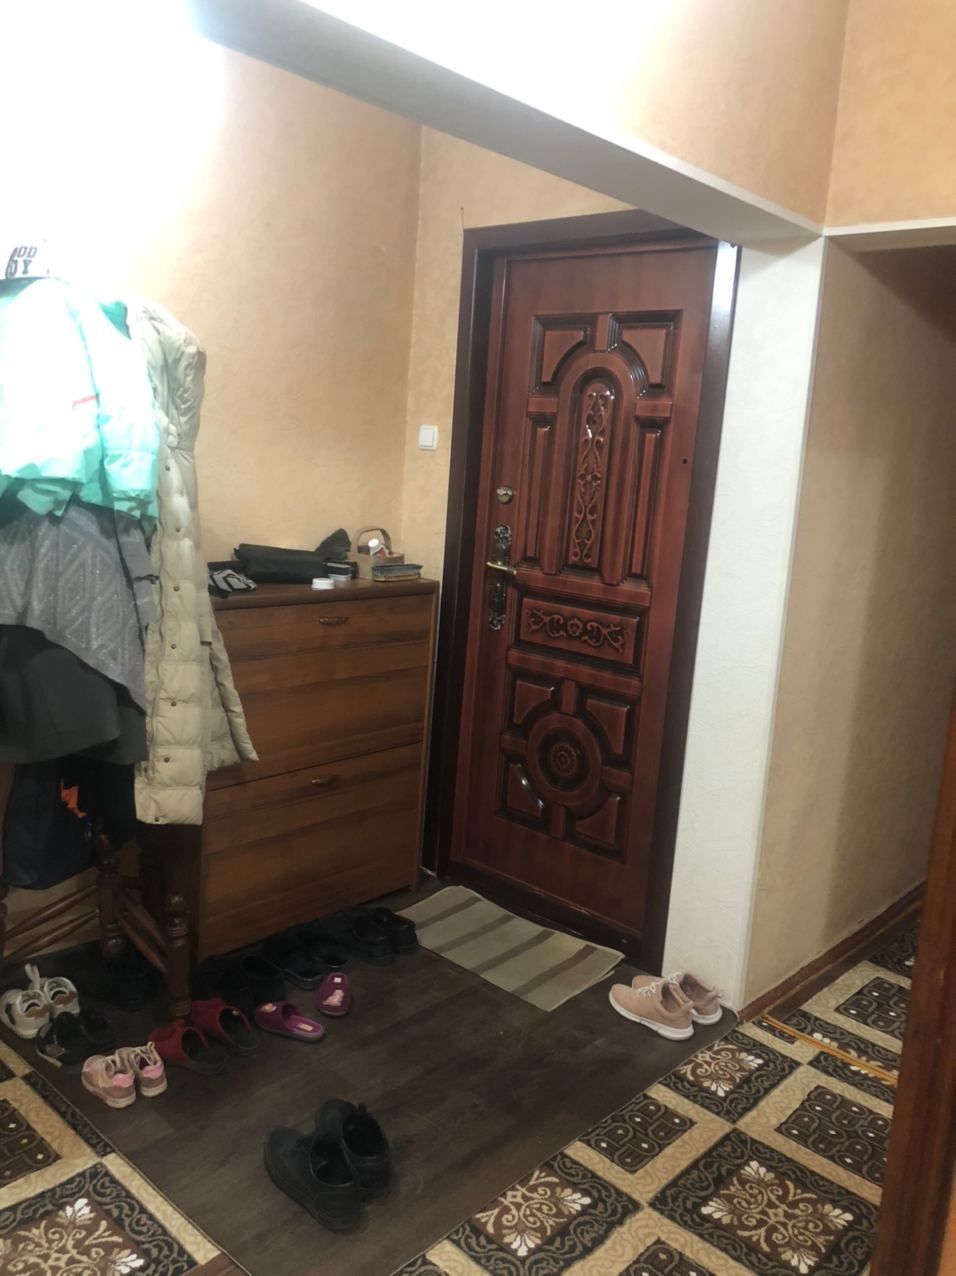 Продается квартира в центре Ташкента